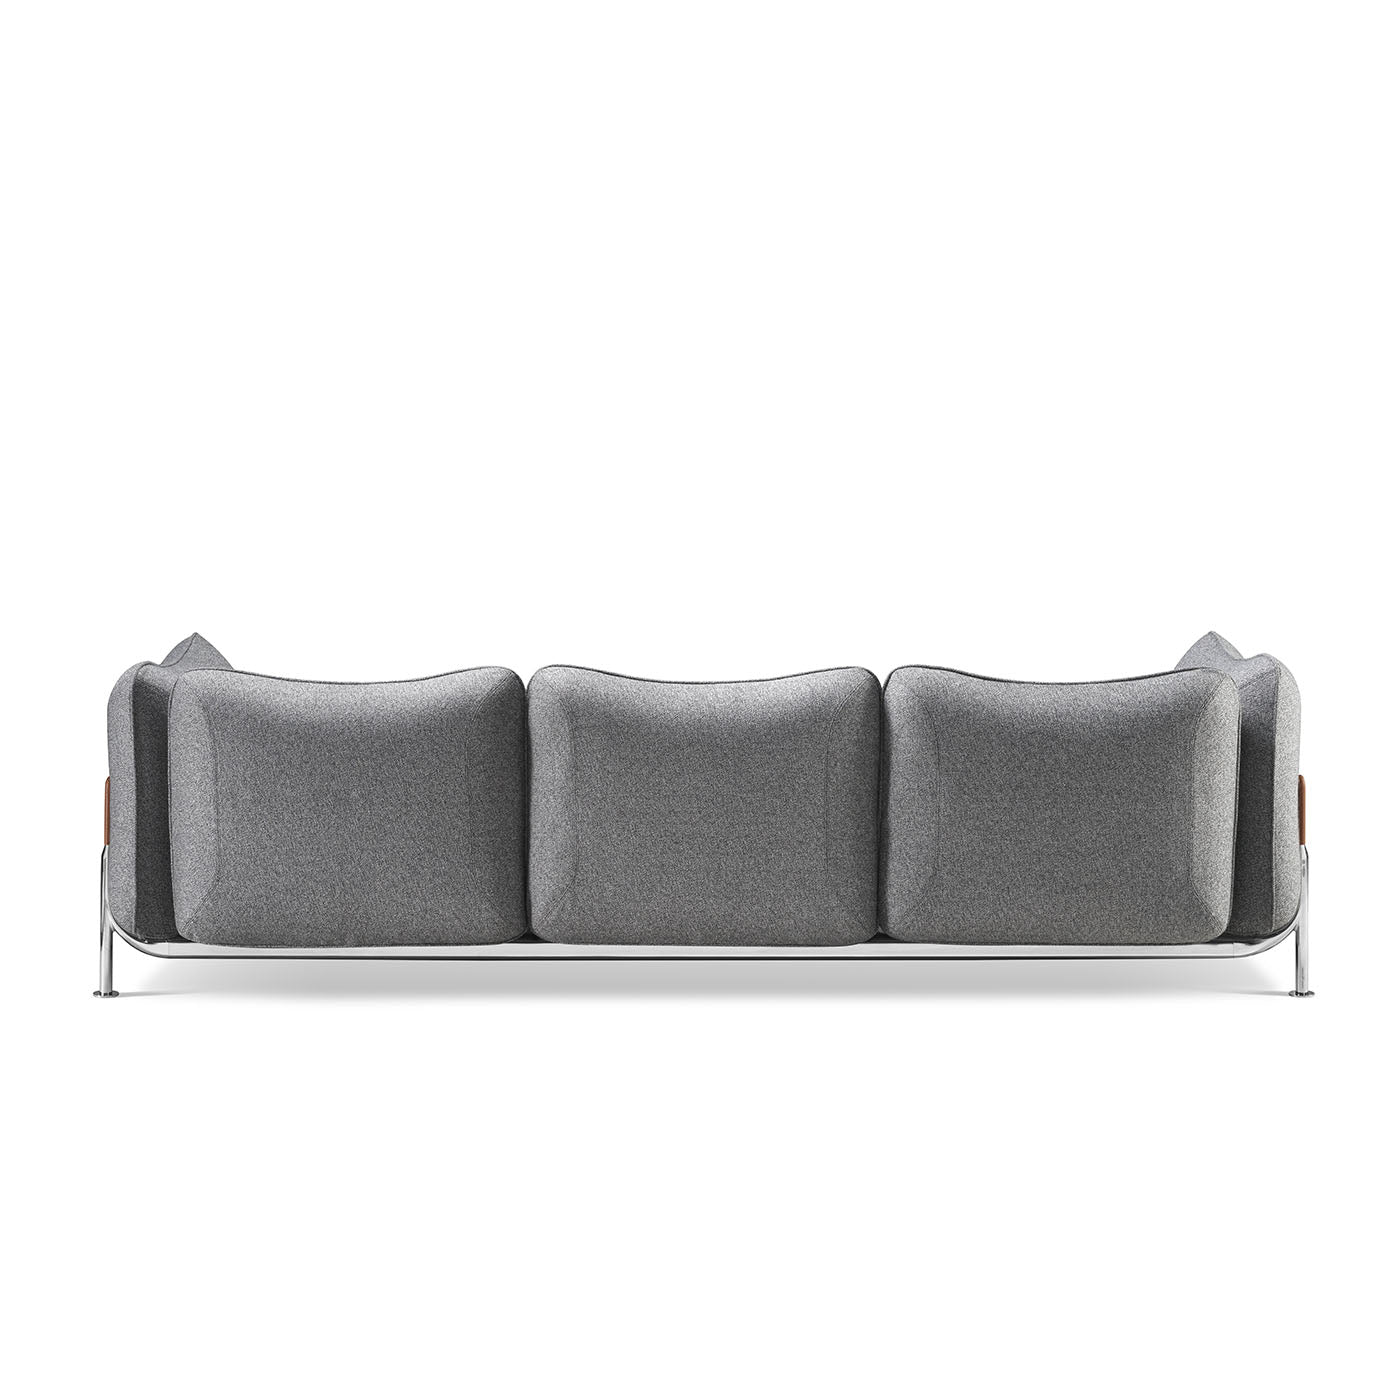 Tasca 3-Seater Gray Fabric Sofa - Alternative view 2